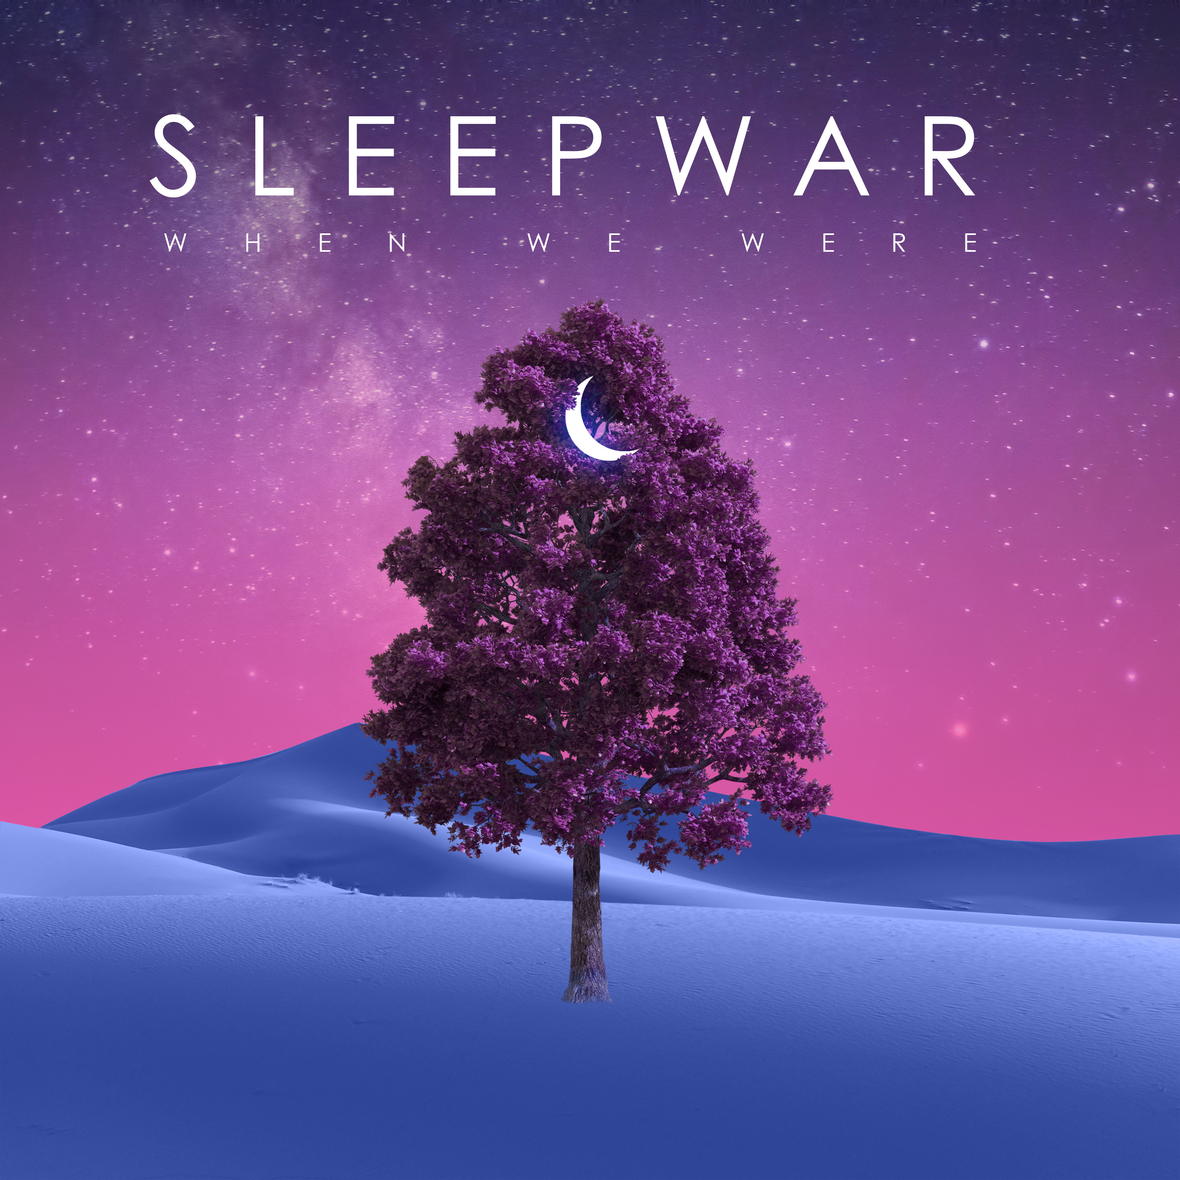 When We Were EP cover - Sleepwar